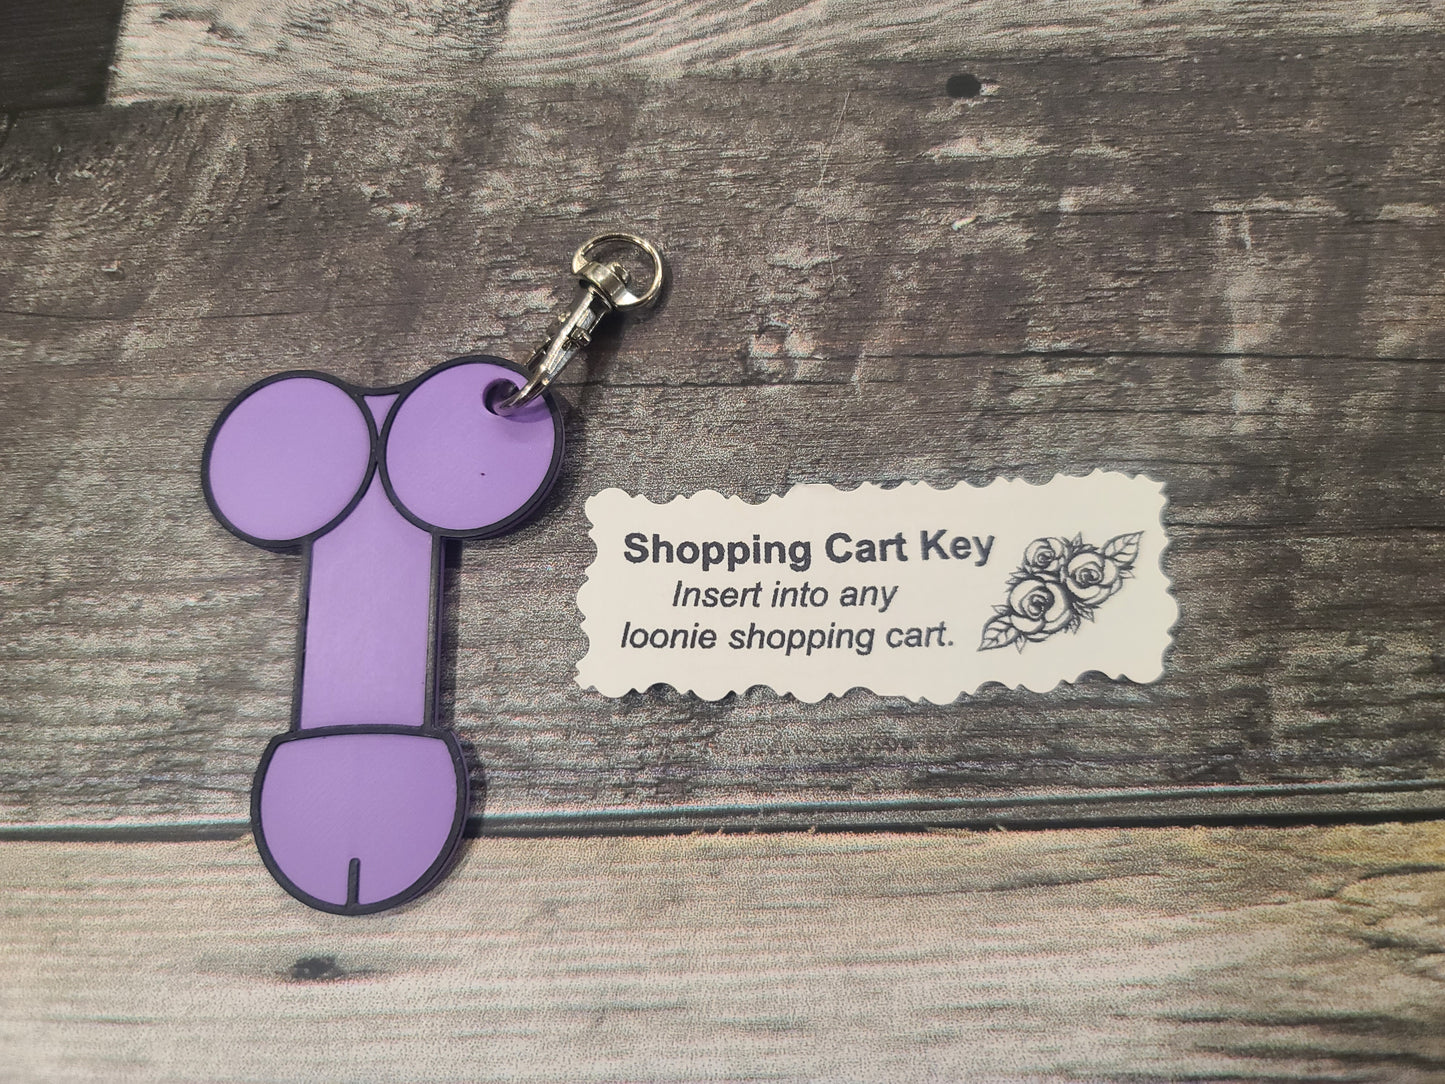 Dick/Penis $1 Shopping Cart Key